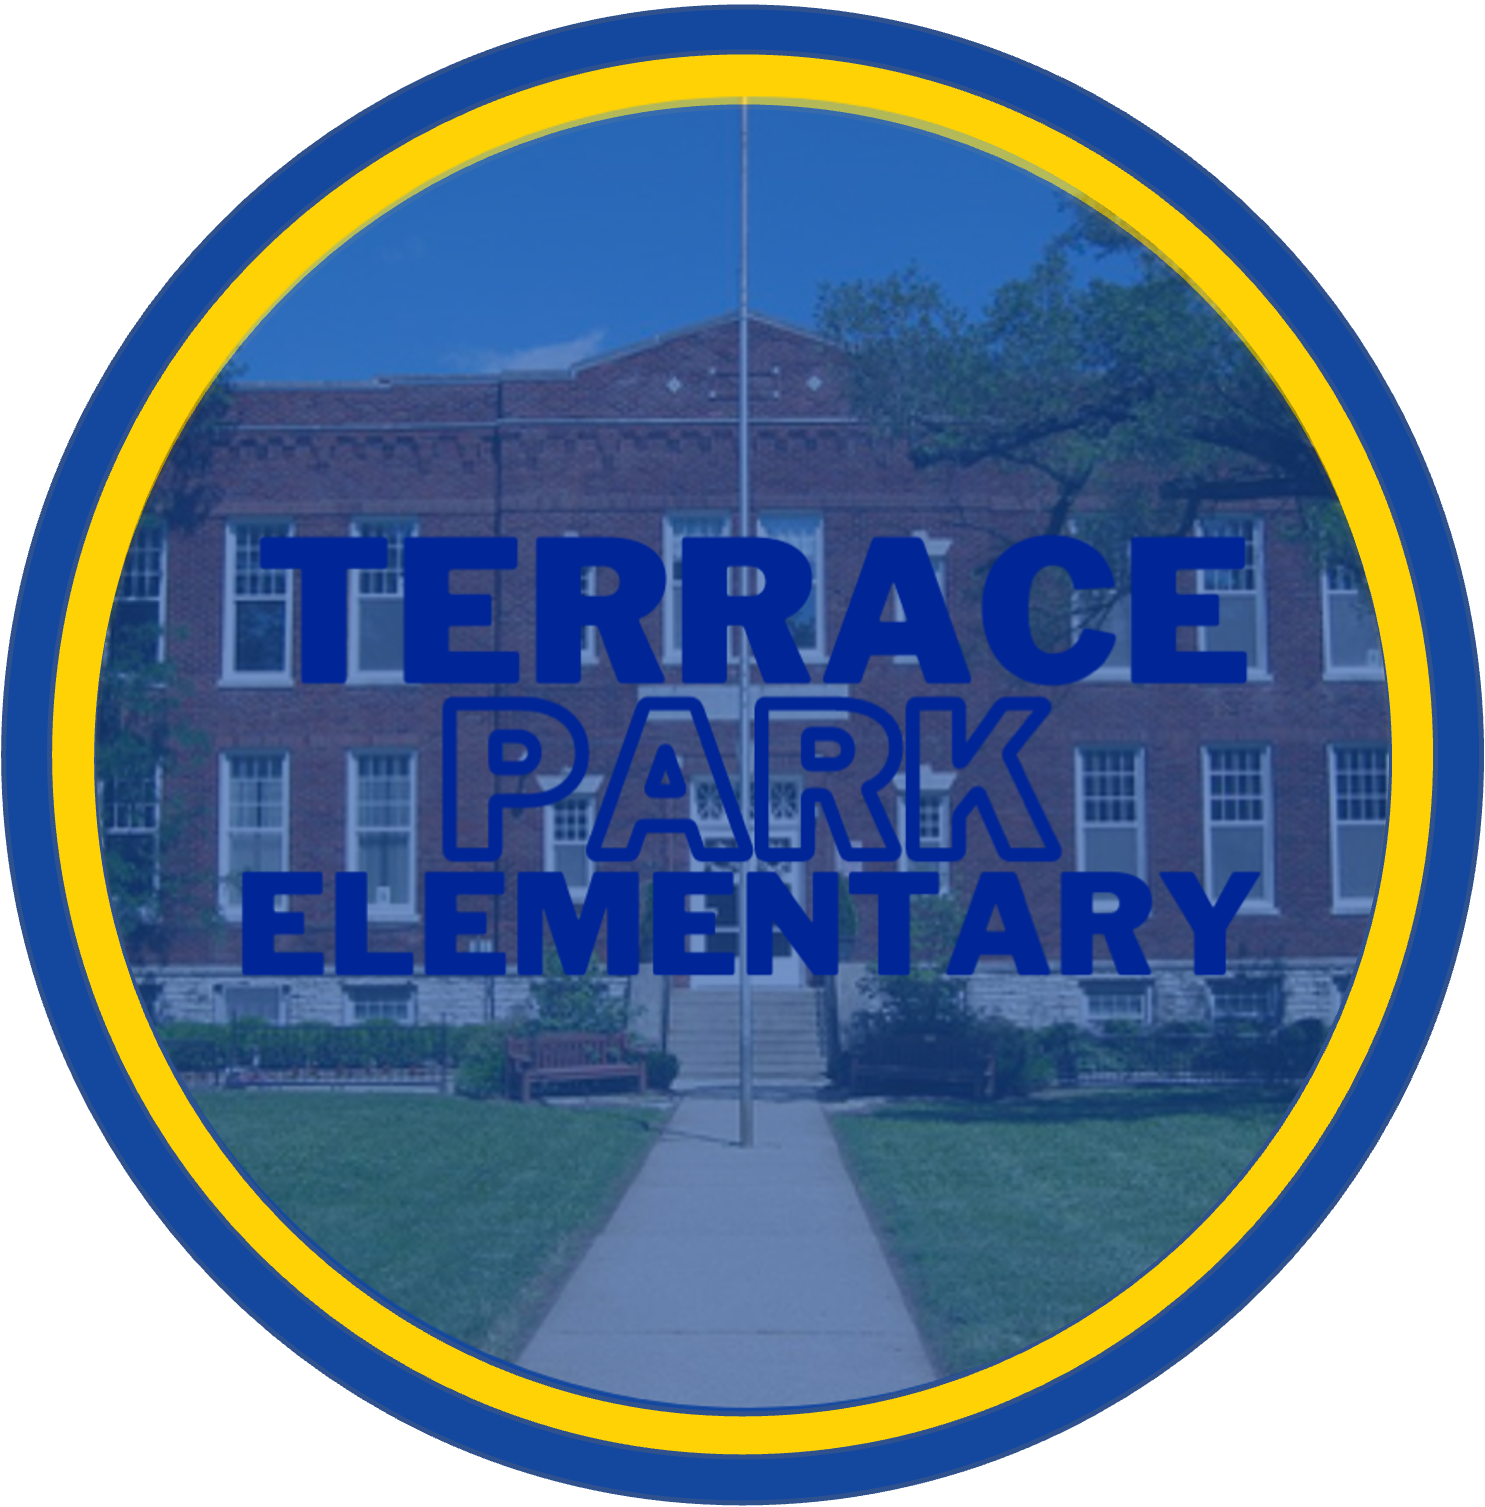 Terrace Park Elementary School